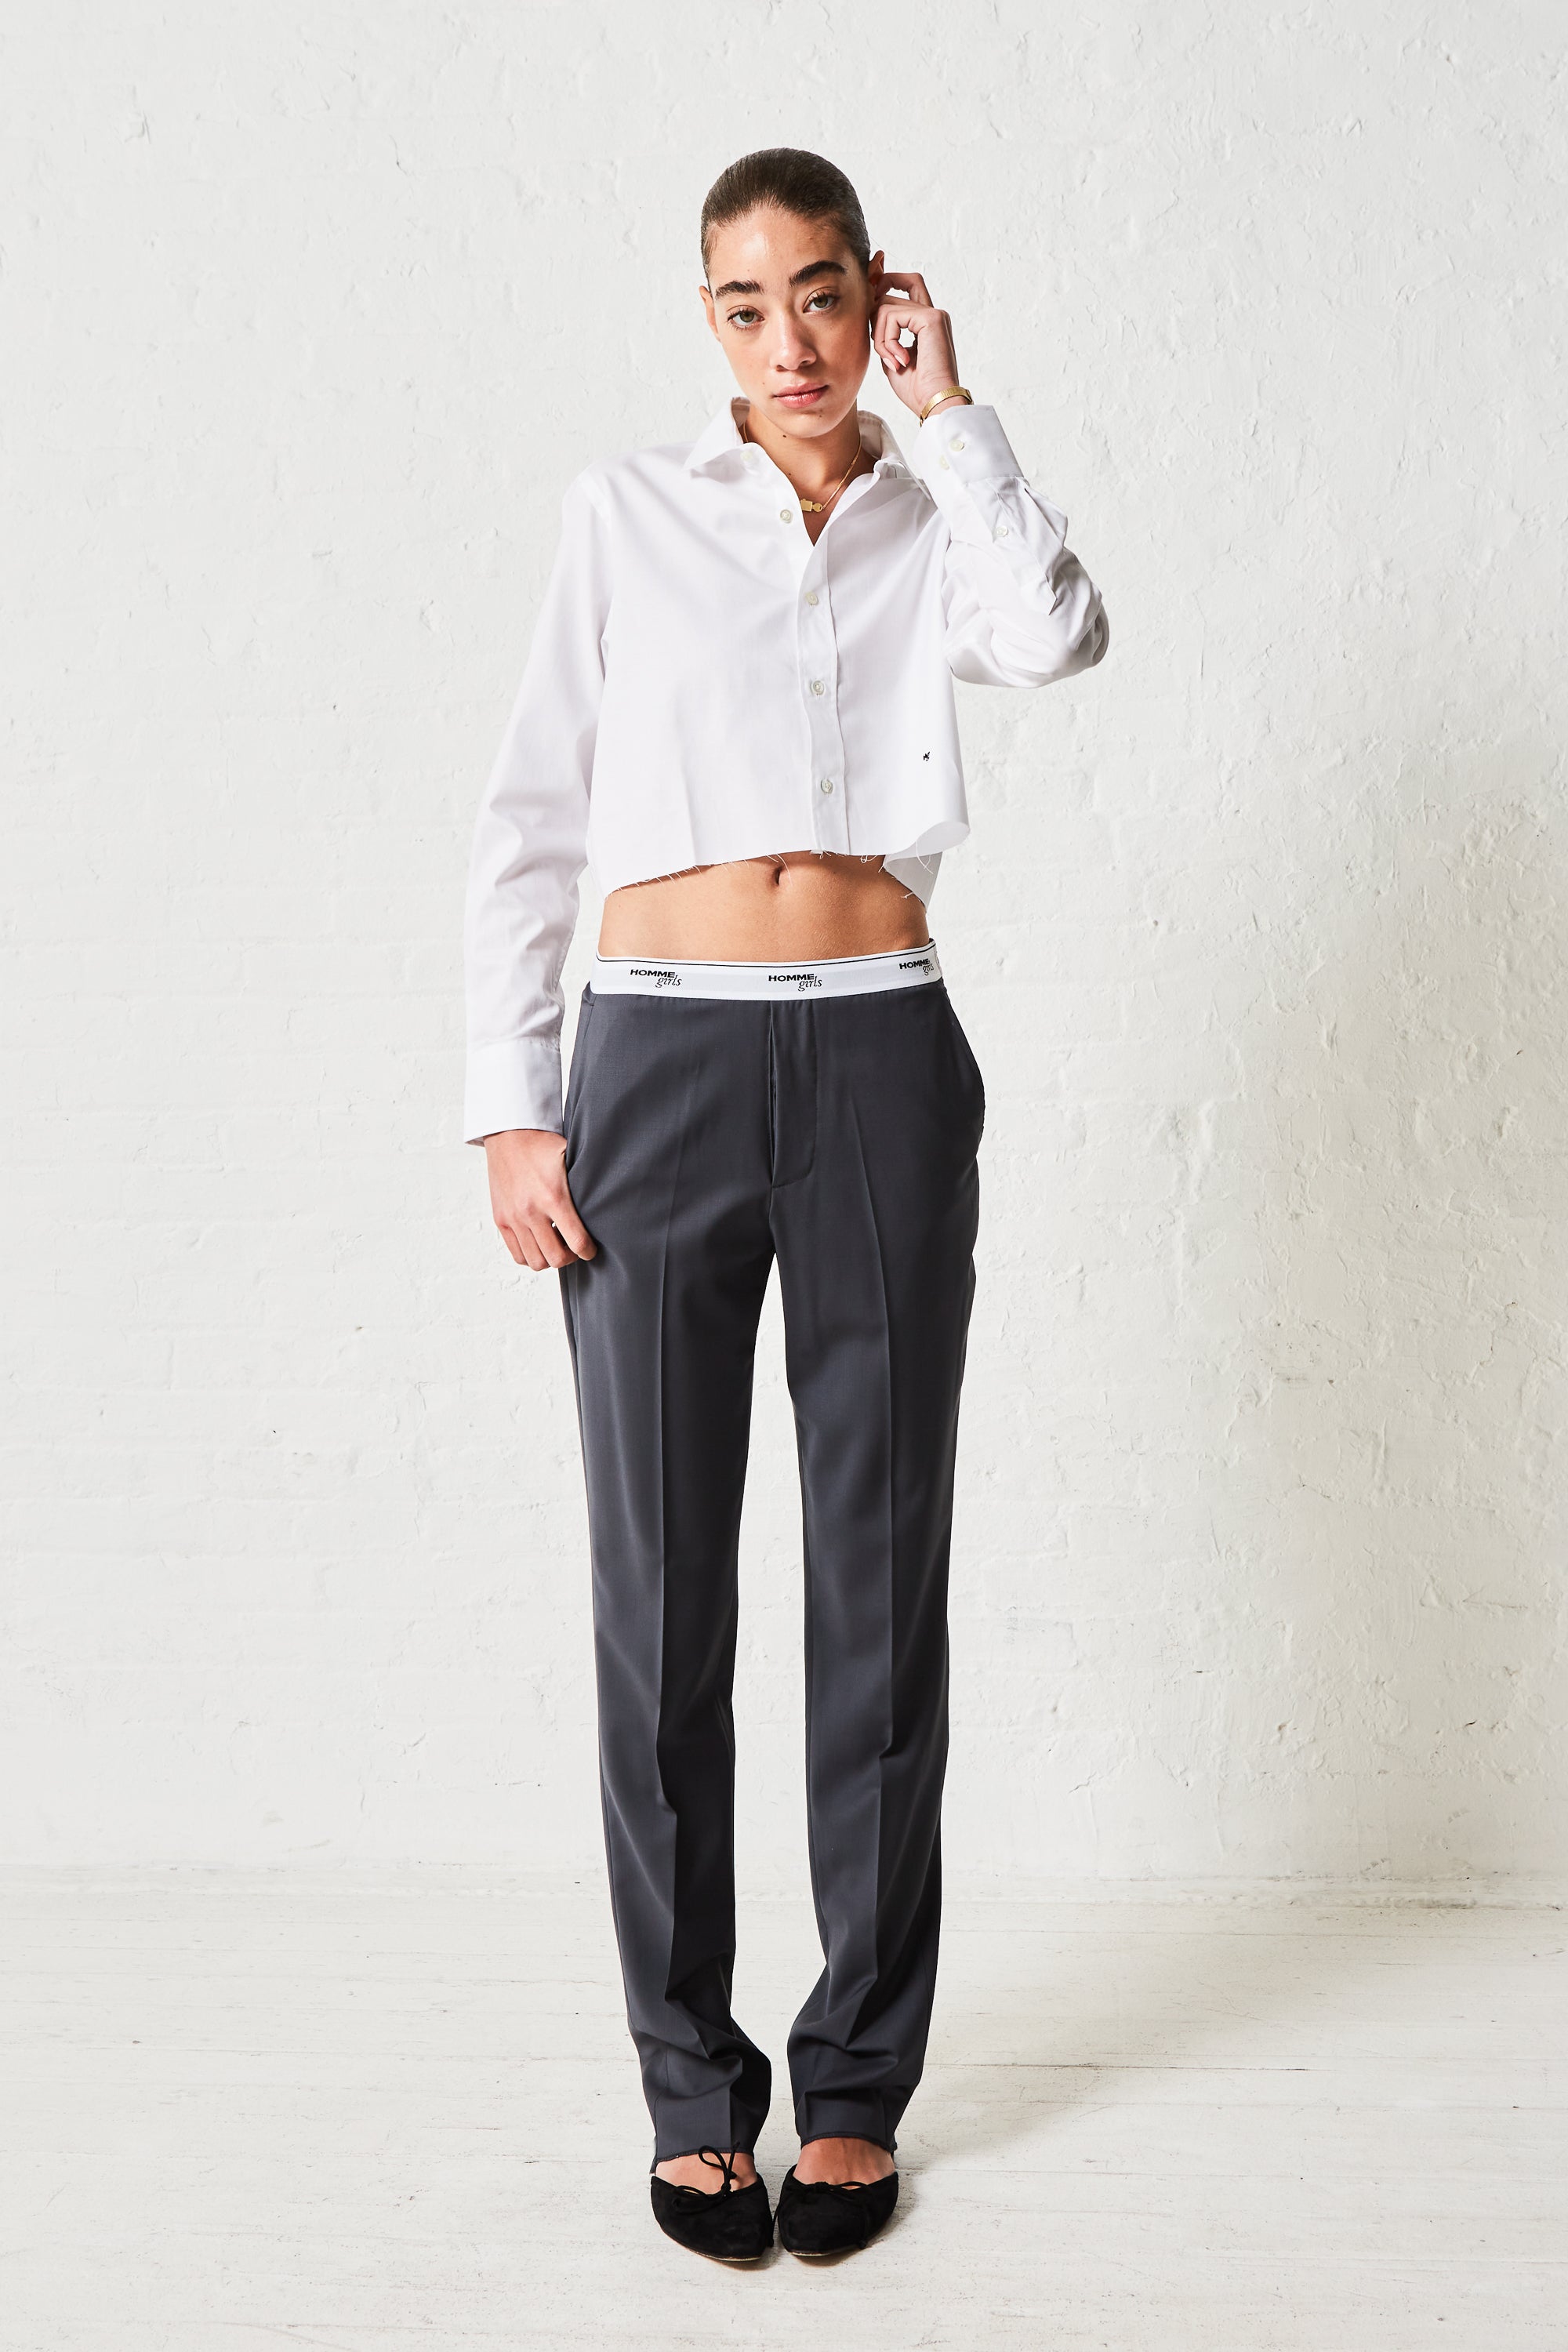 Buy TINY GIRL Solid Denim Regular Fit Girls Pants | Shoppers Stop